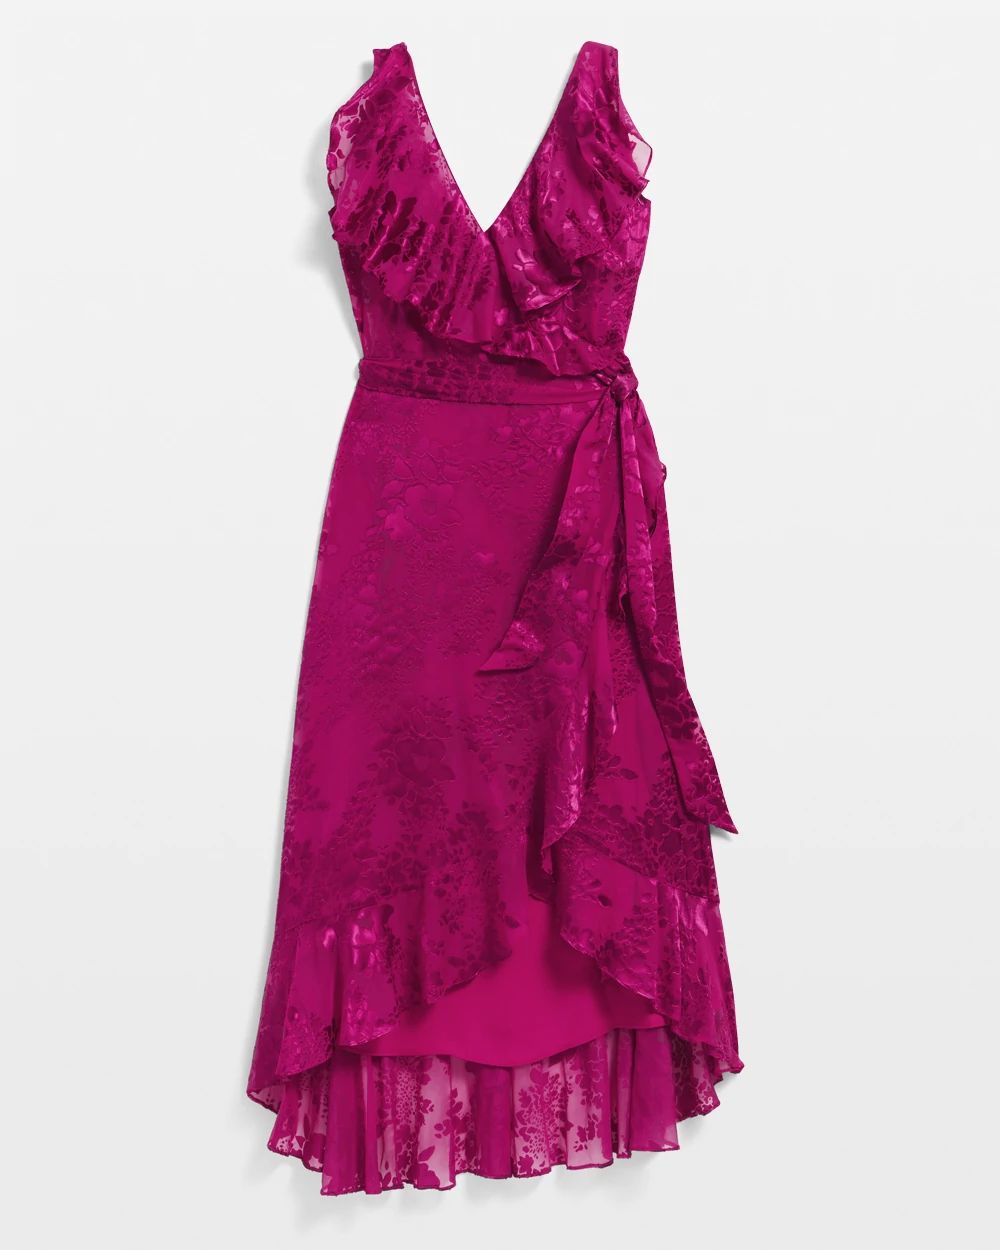 Sleeveless Burnout Wrap Midi Dress click to view larger image.